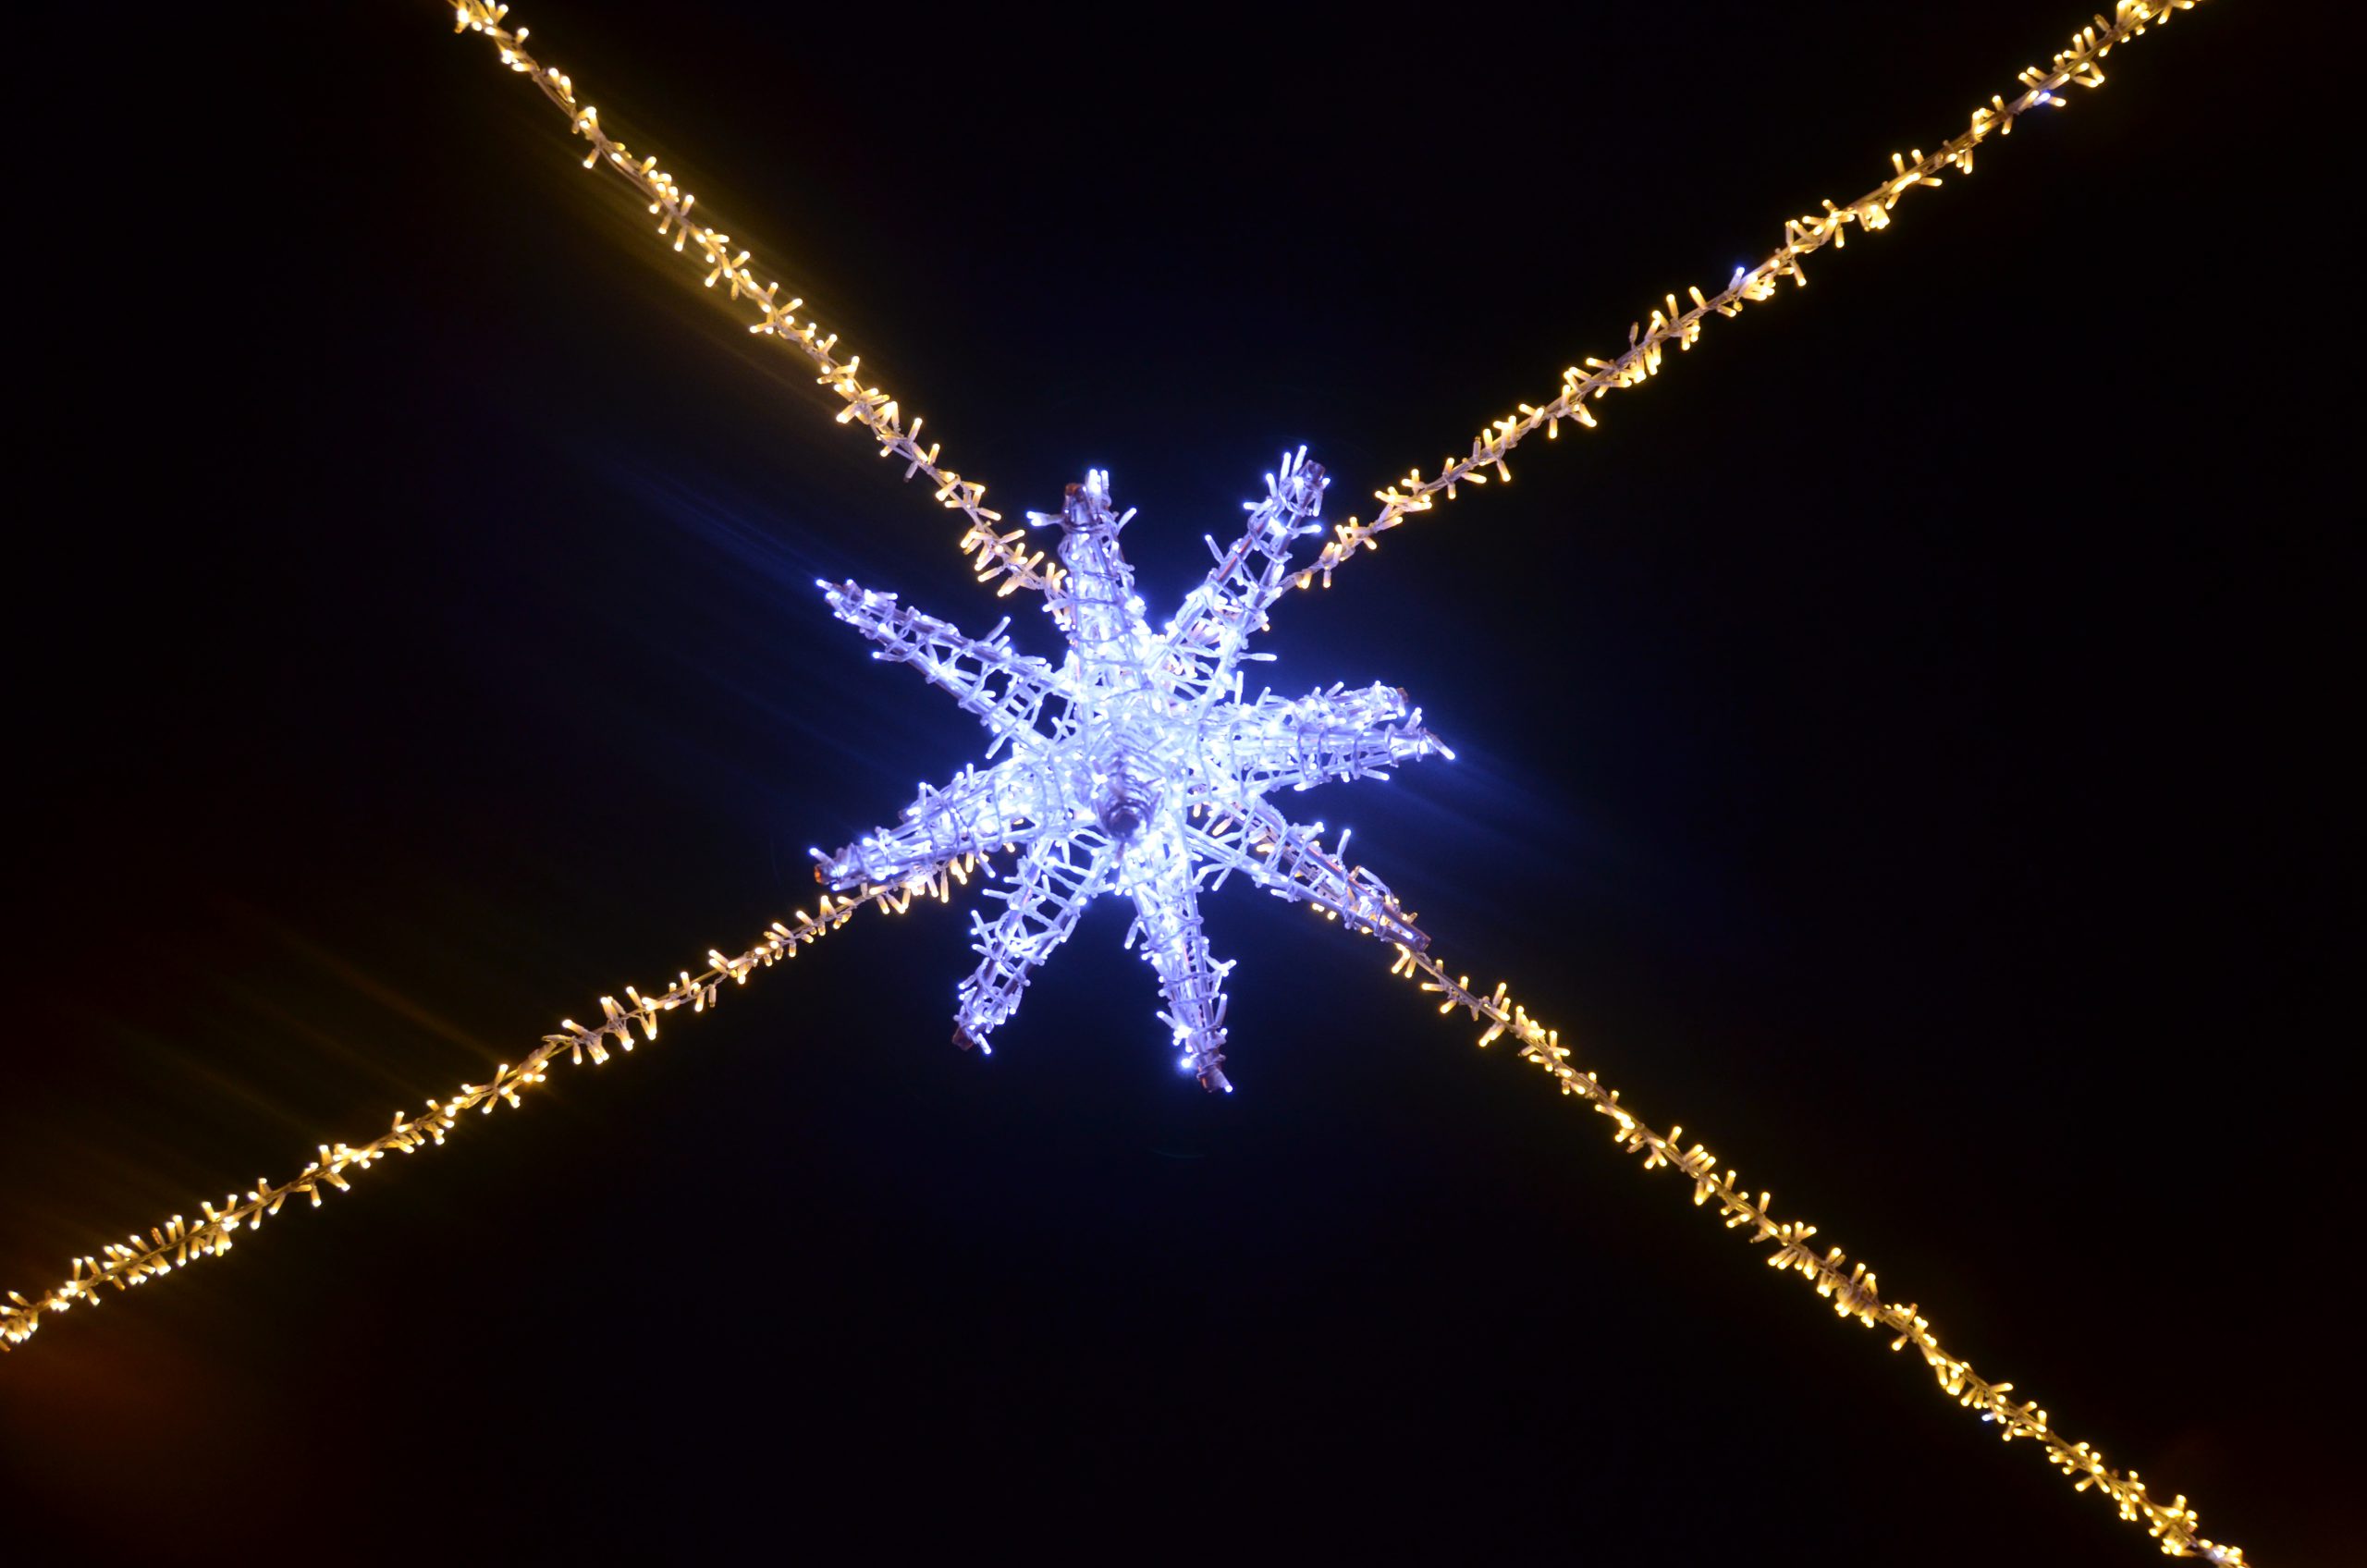 15+ Free Christmas Light Displays in Edmonton and Area